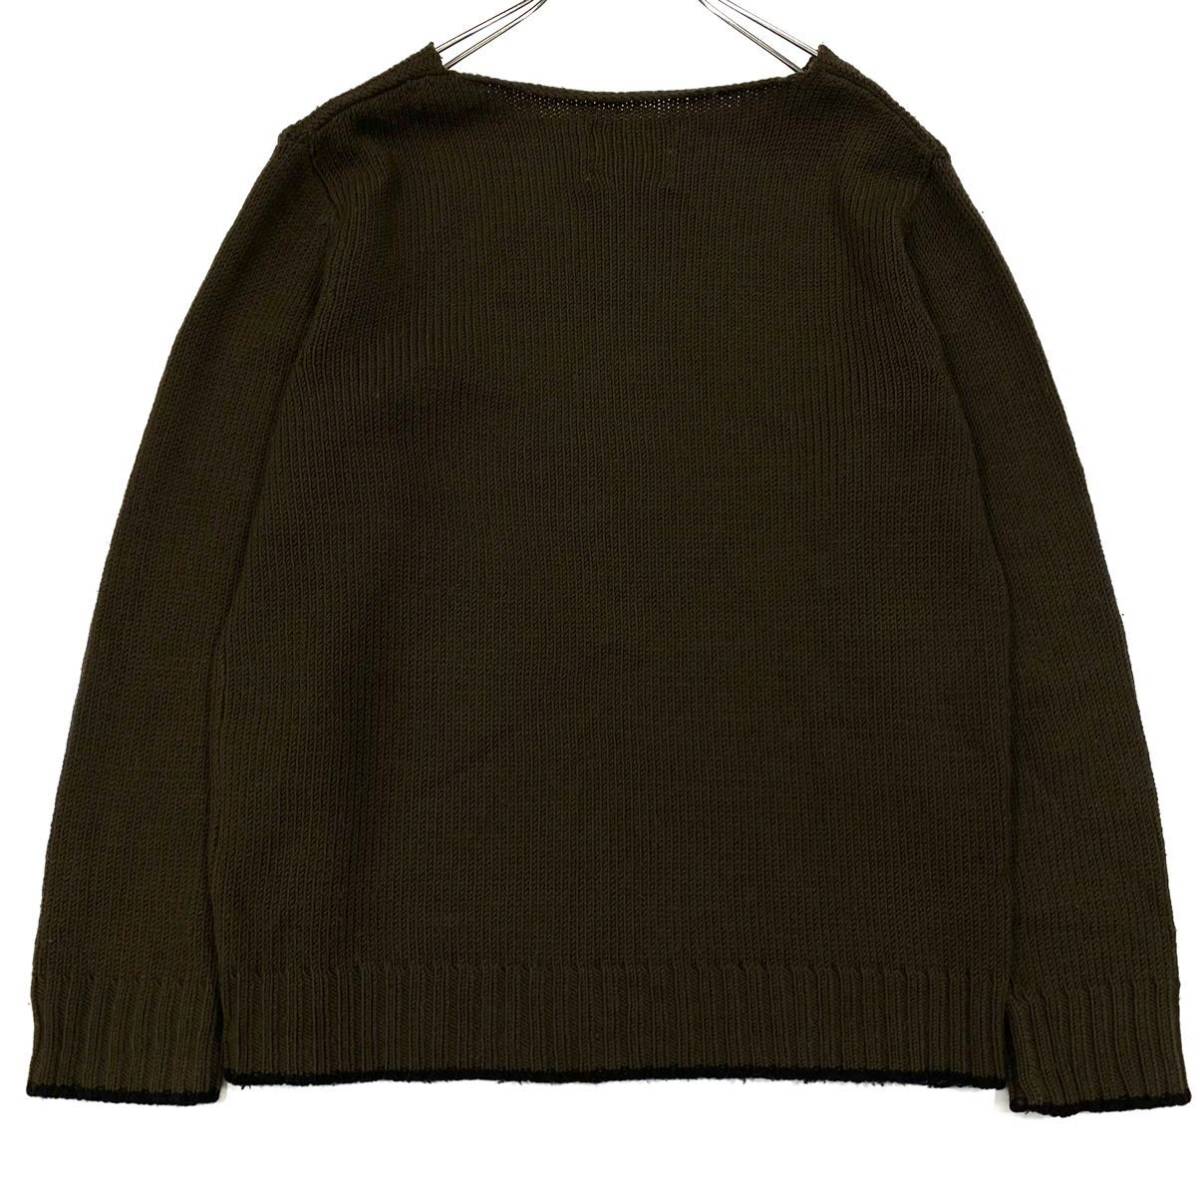 TAKEO KIKUCHI( Takeo Kikuchi ) knitted sweater men's 2 brown group / black 